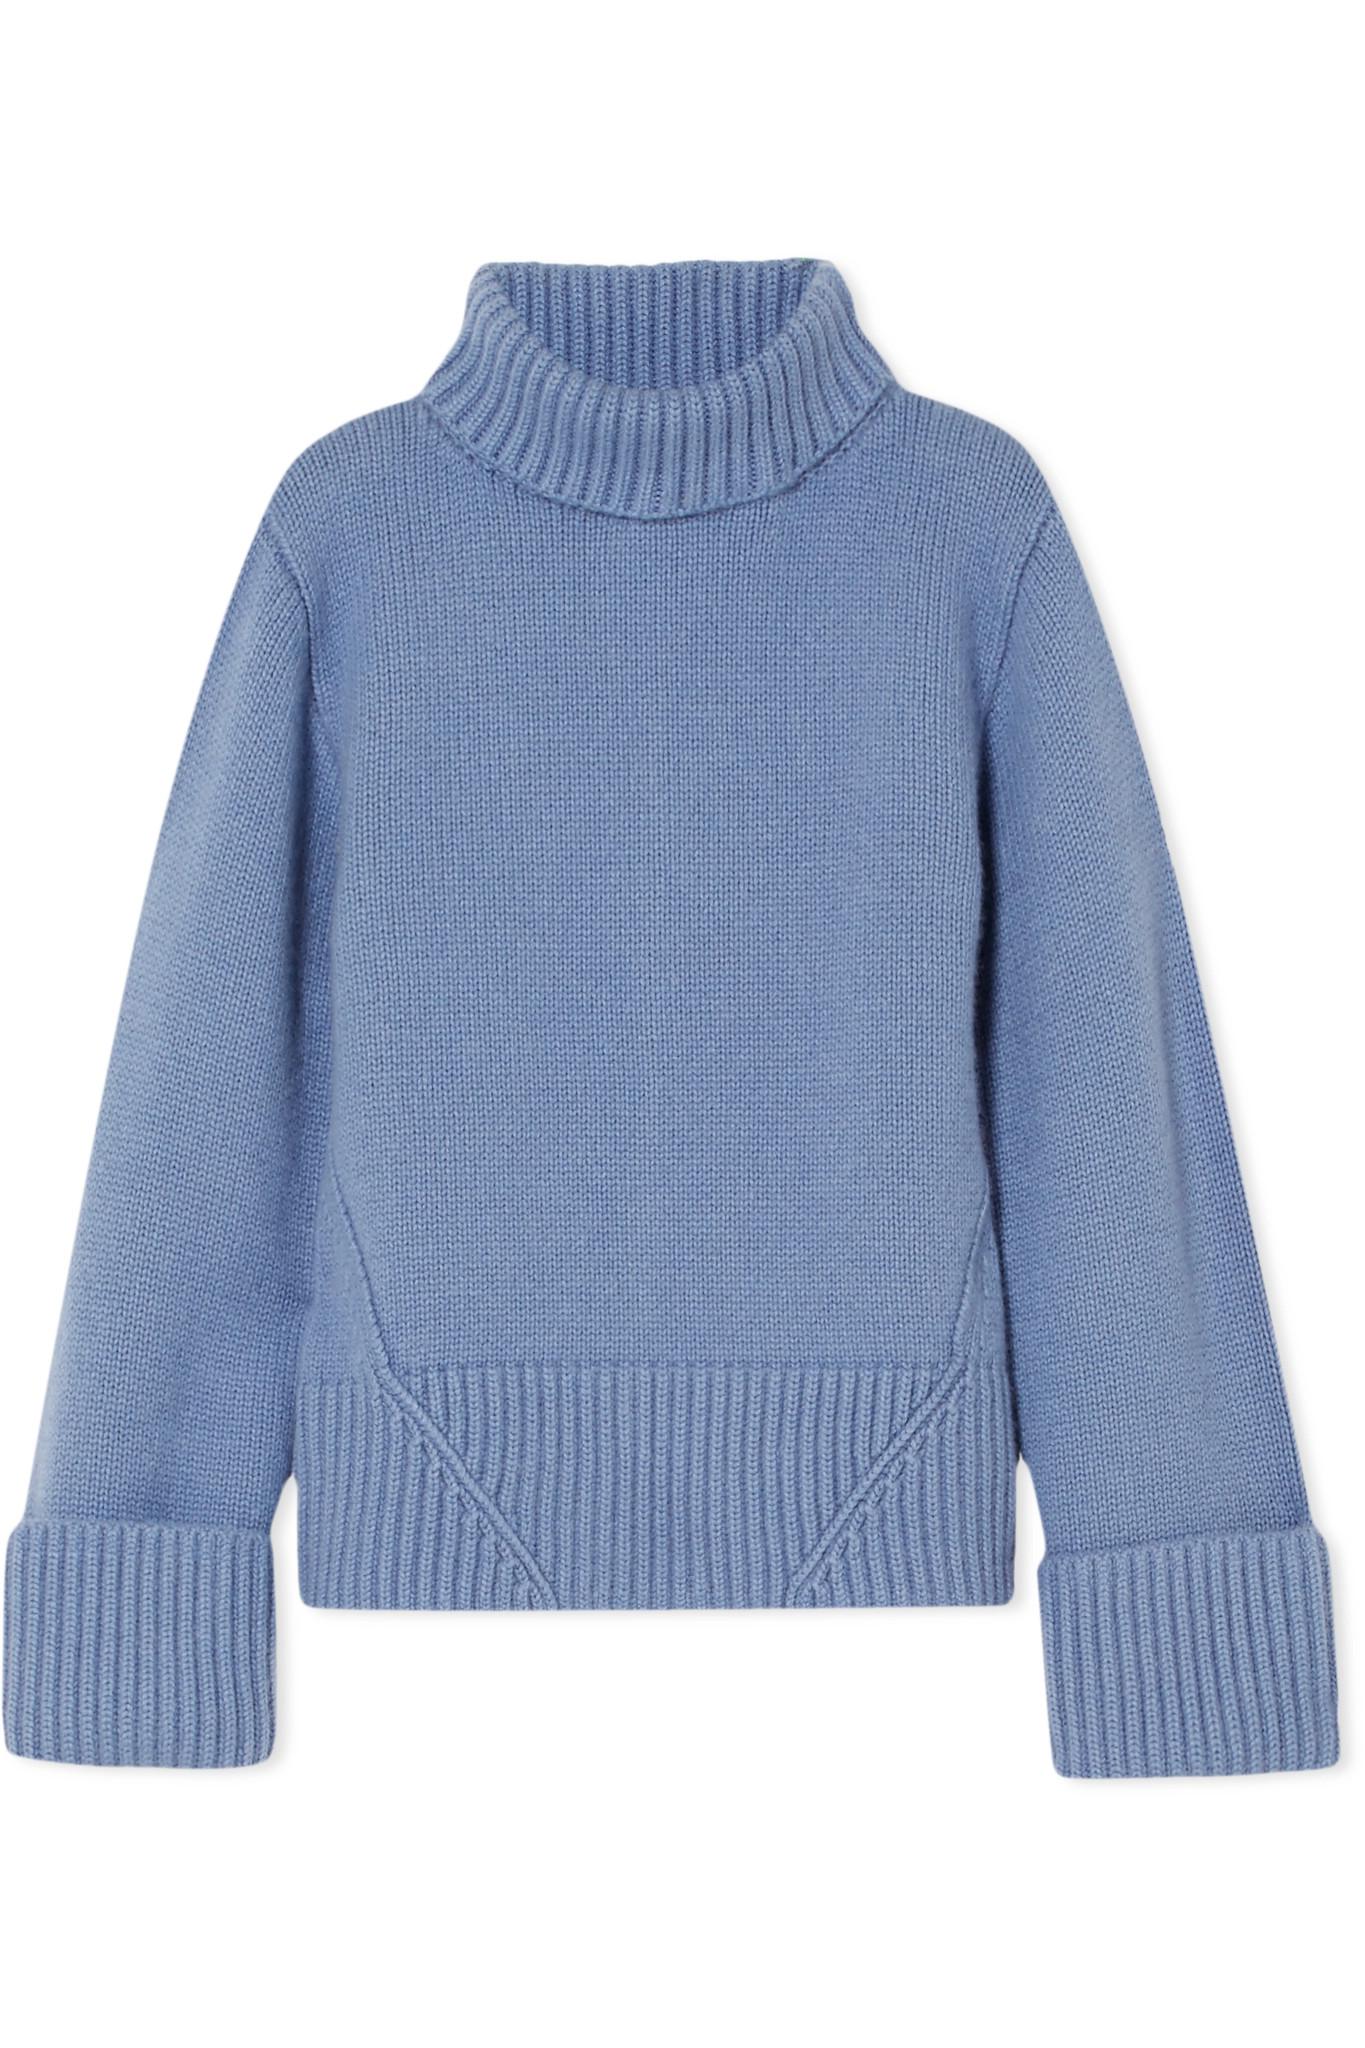 Khaite Wallis Cashmere Turtleneck Sweater in Light Blue (Blue) - Lyst